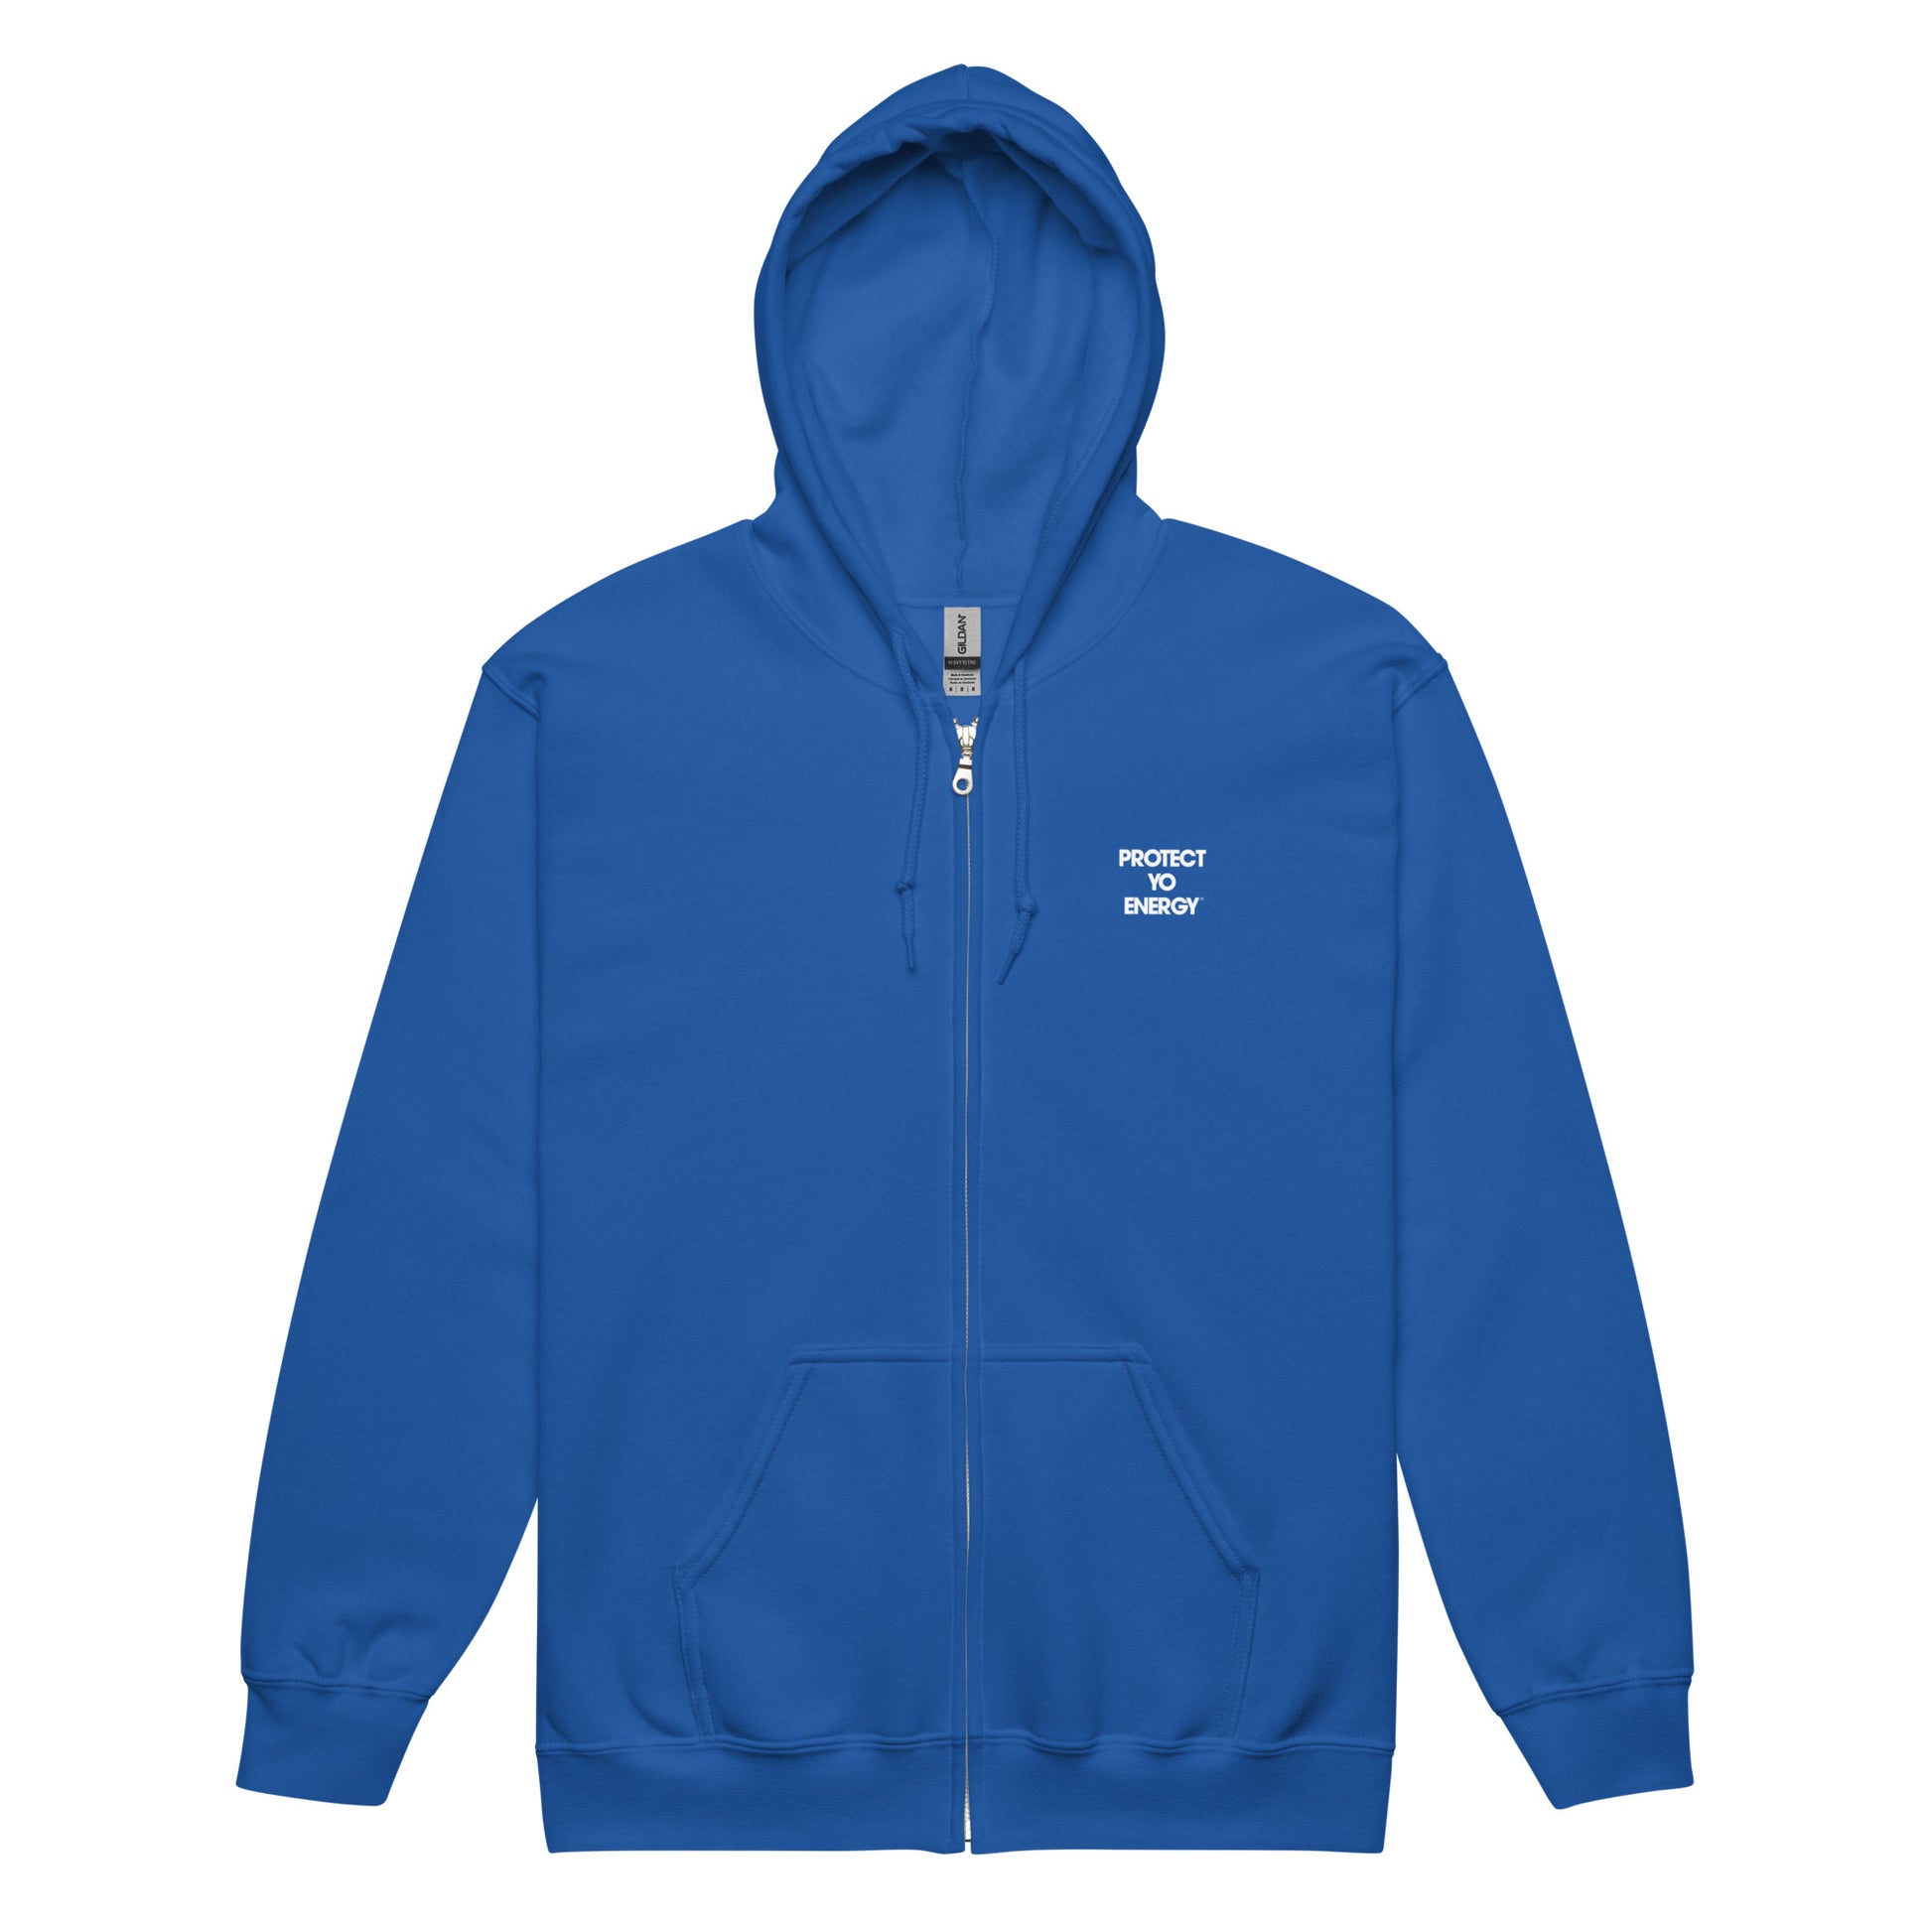 PYE  heavy blend zip hoodie - PROTECT YO ENERGY 